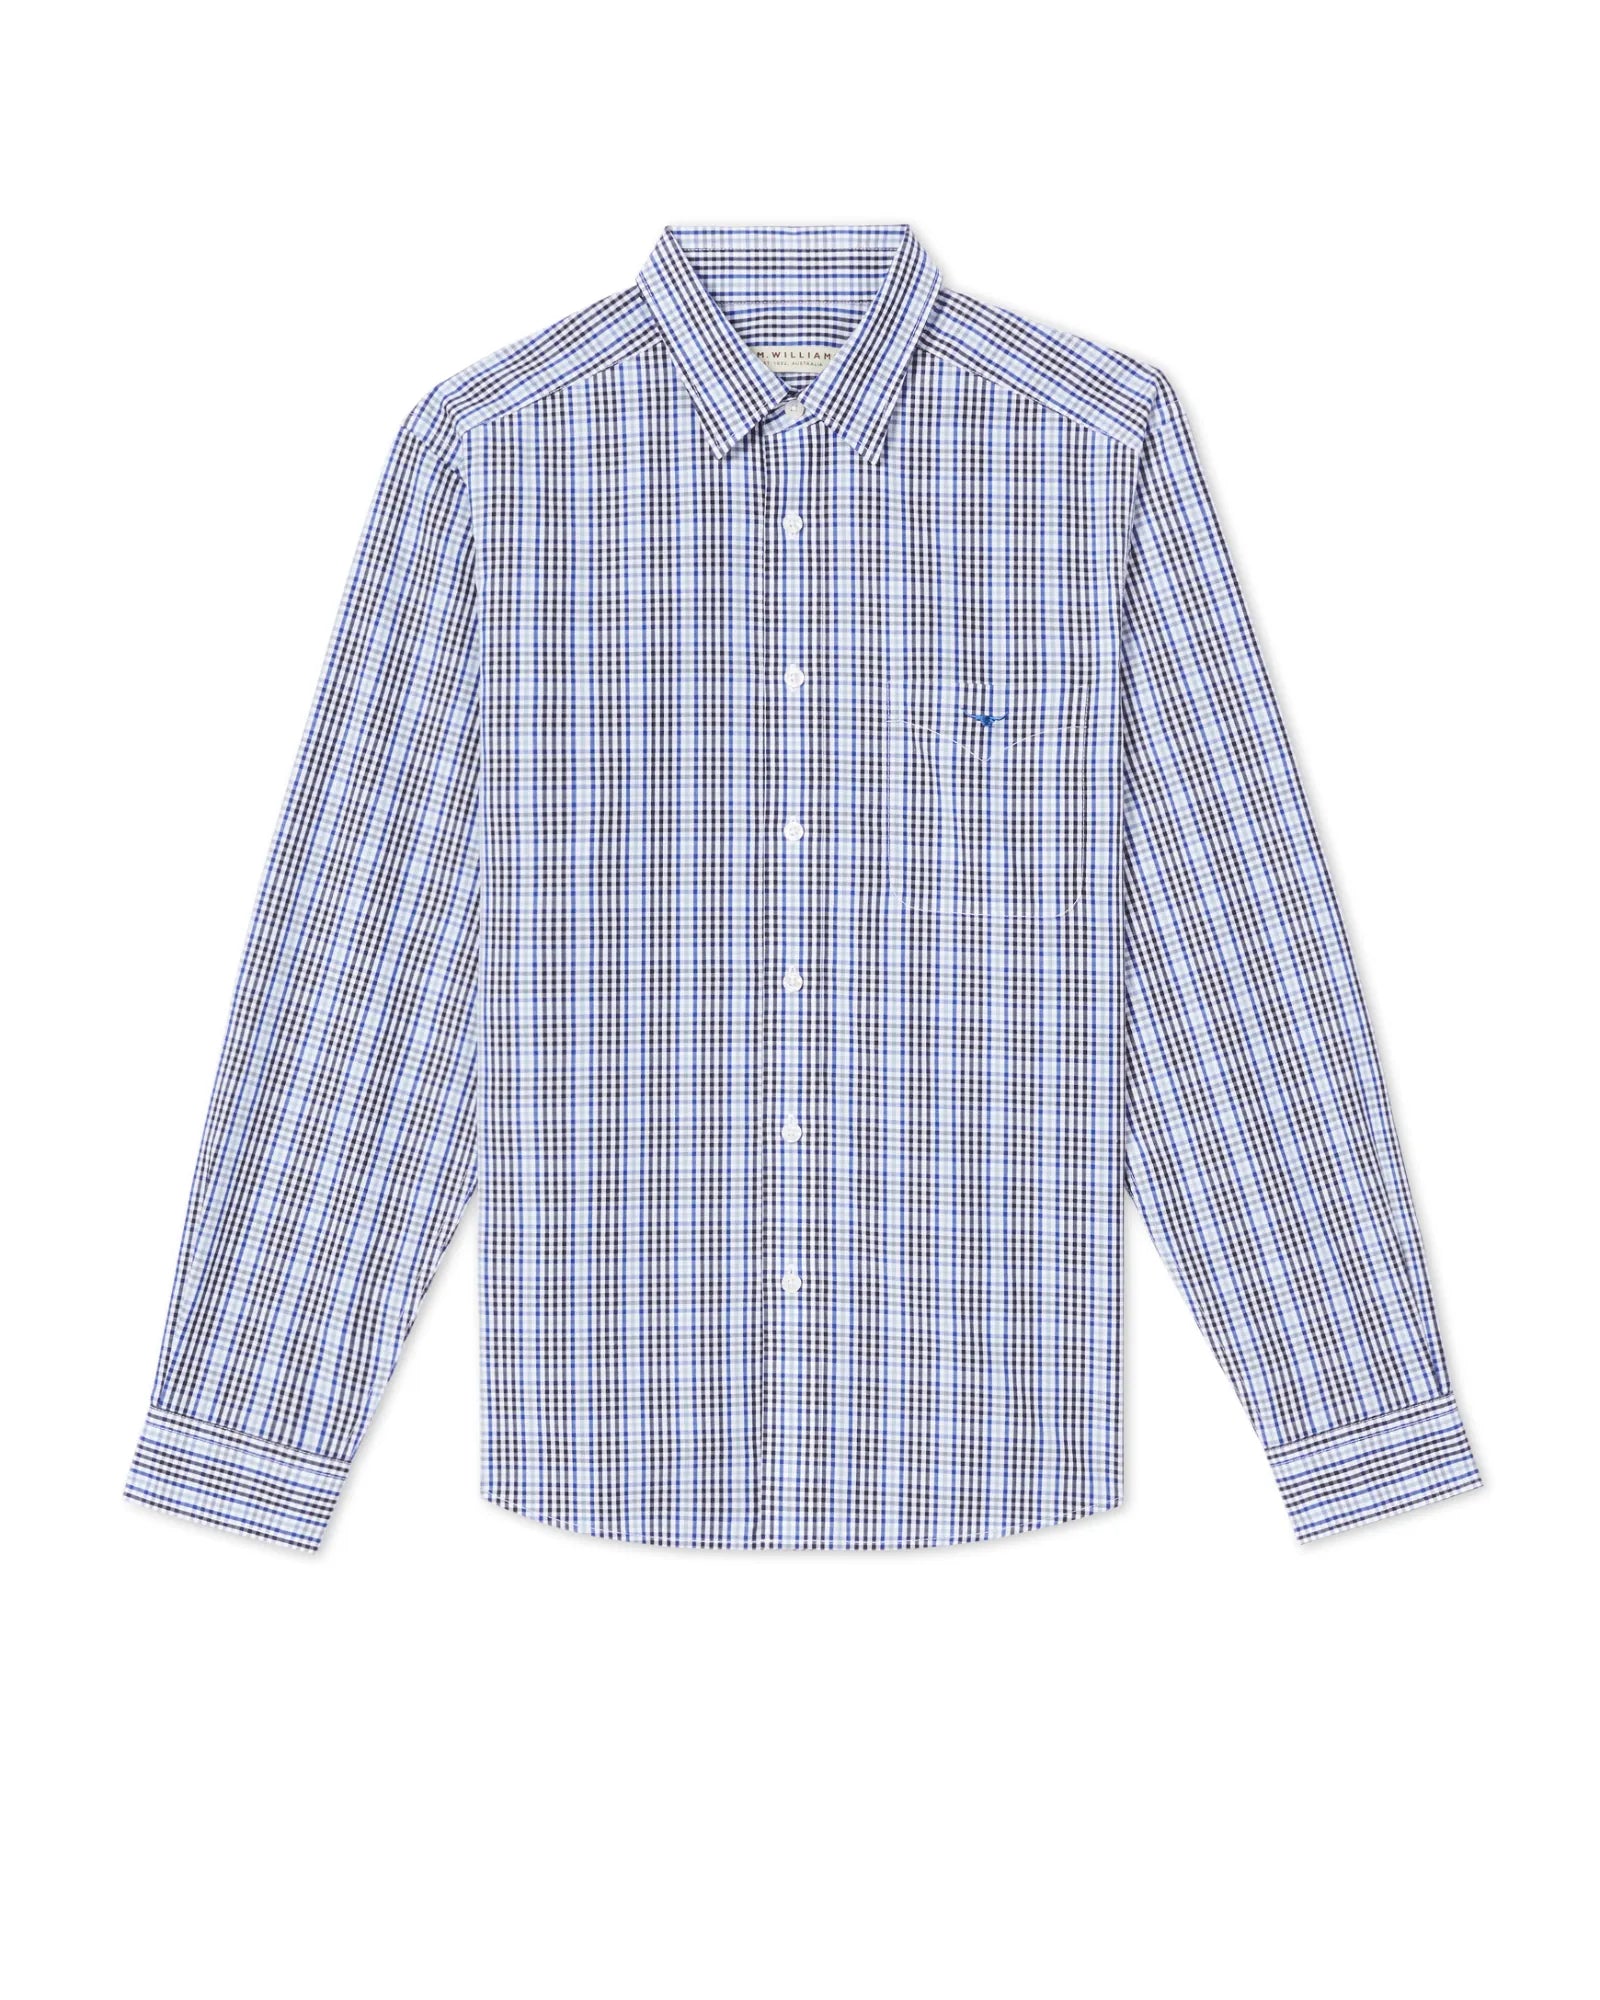 Collins Shirt - Navy/Blue/White